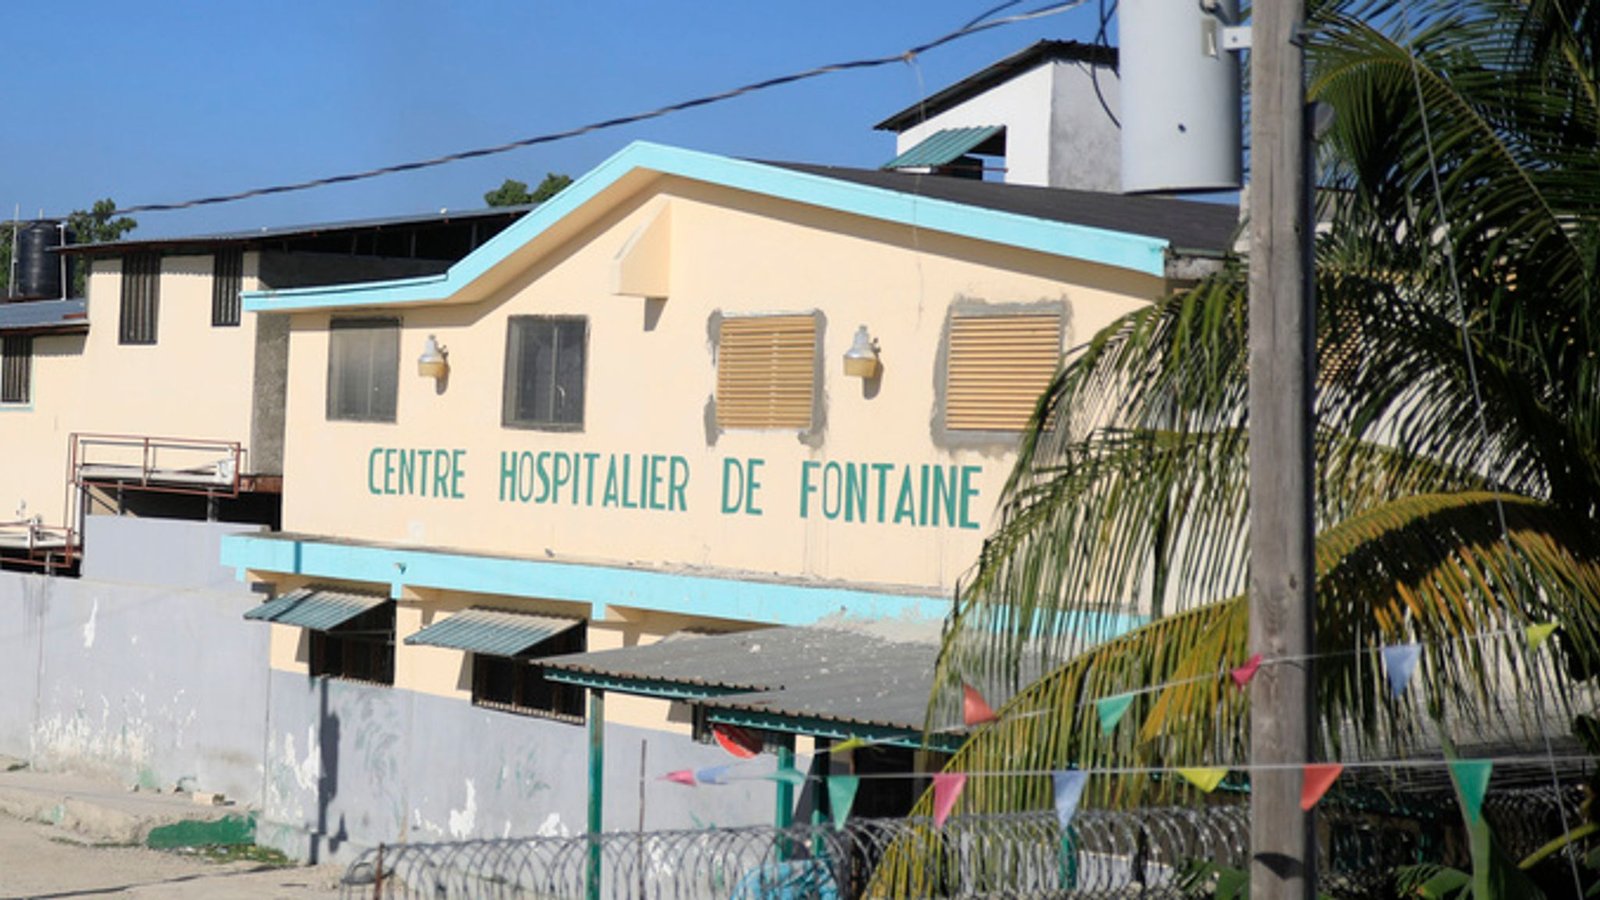 Gang violence in Haiti forces hospital evacuation